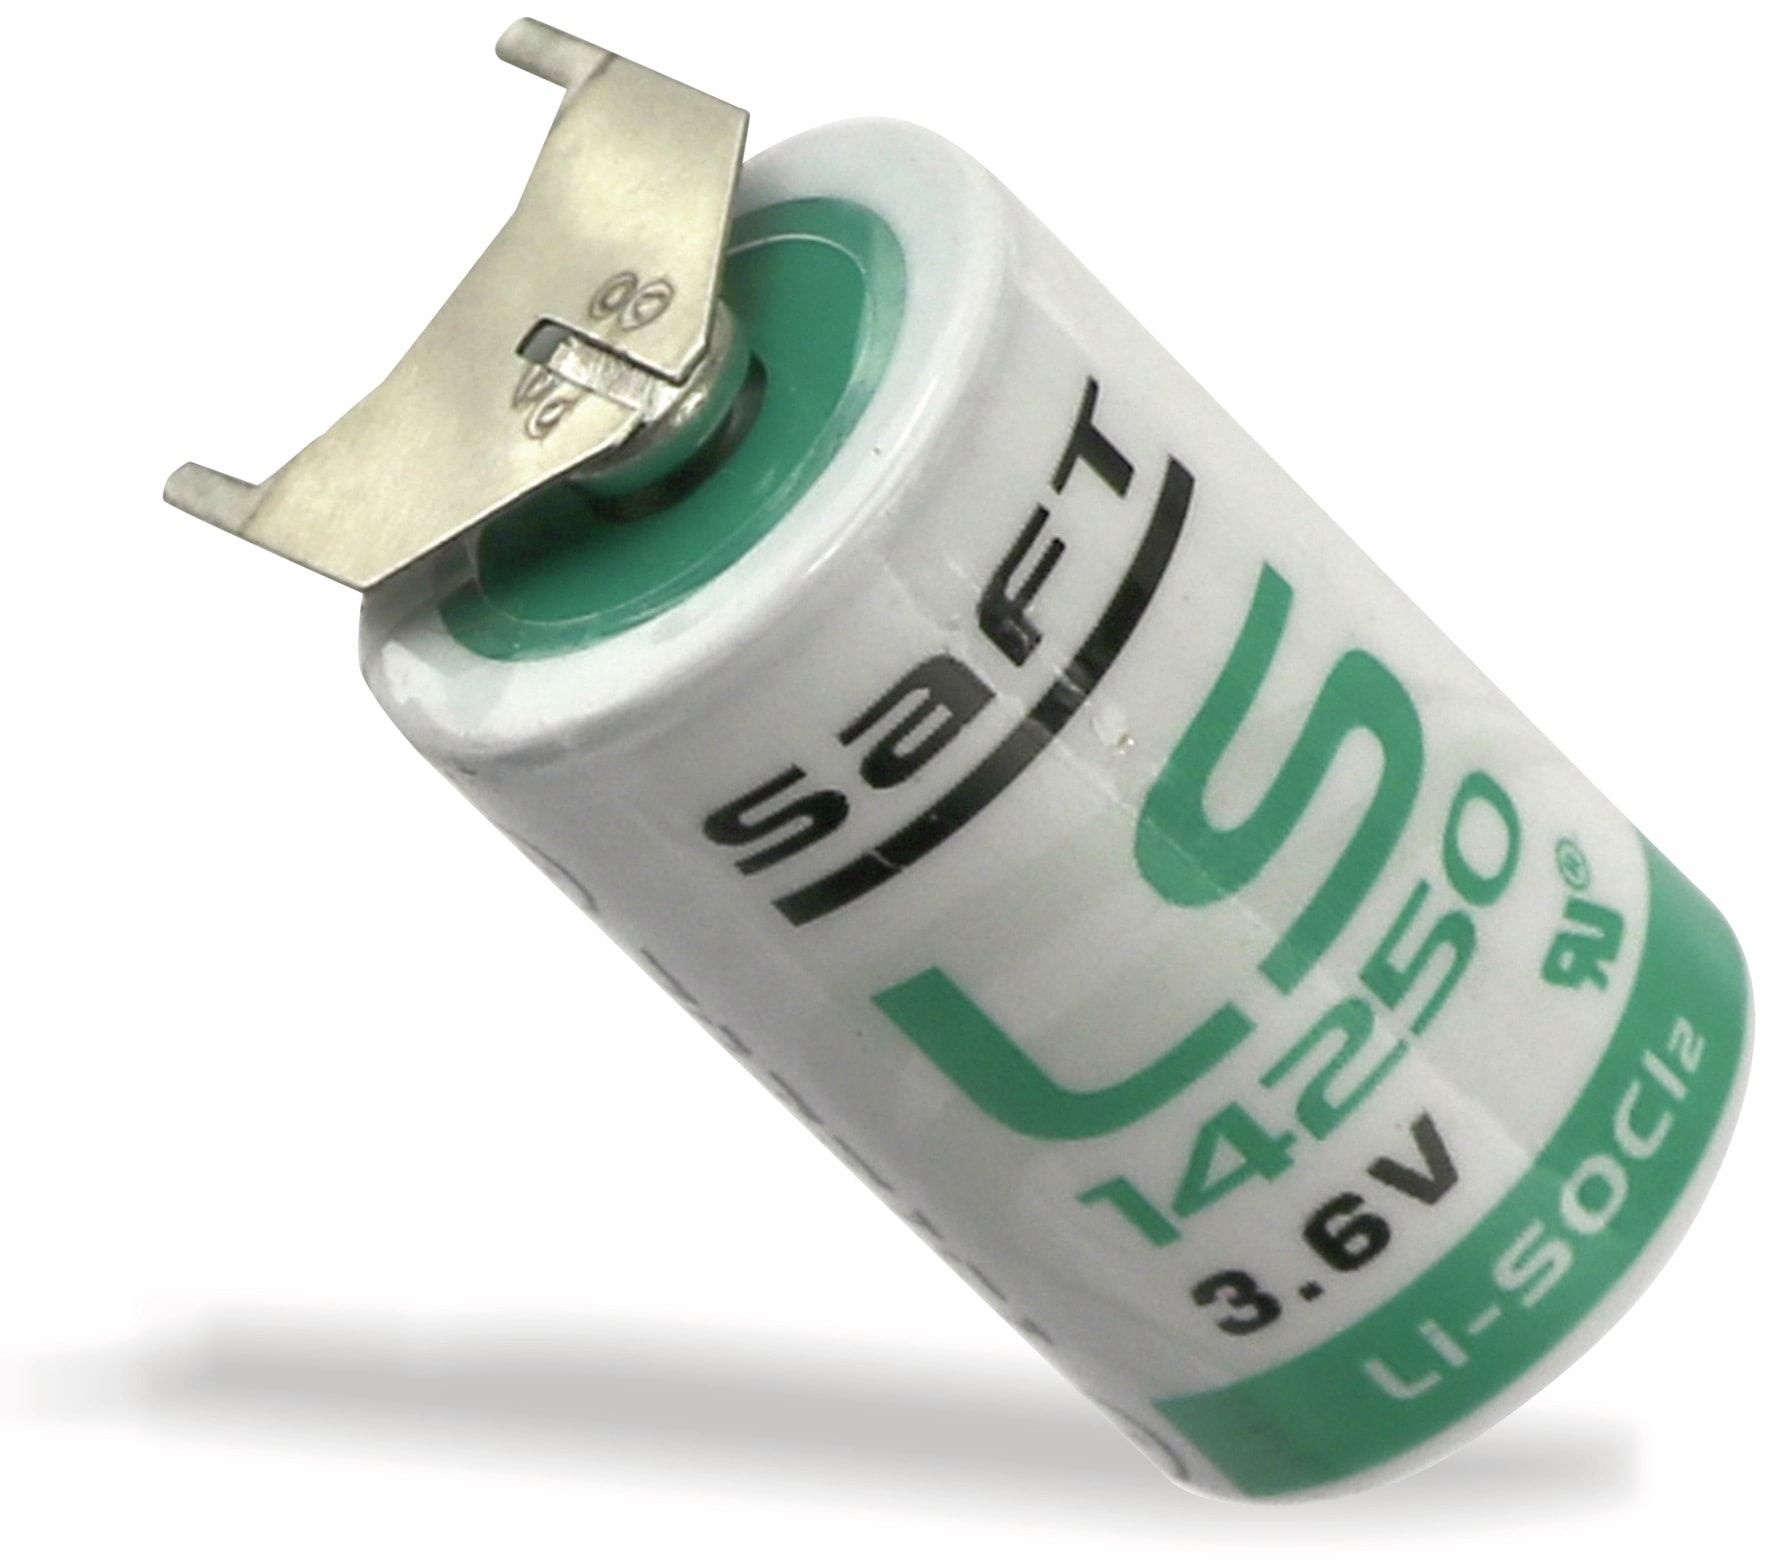 Lithium-Batterie SAFT (Li-SOCl2) mAh 2/1 14250-3PF, 3,6 Batterie AA, Lithium-Thionylchlorid ++/-, 1/2 LS 1200 V-, Print